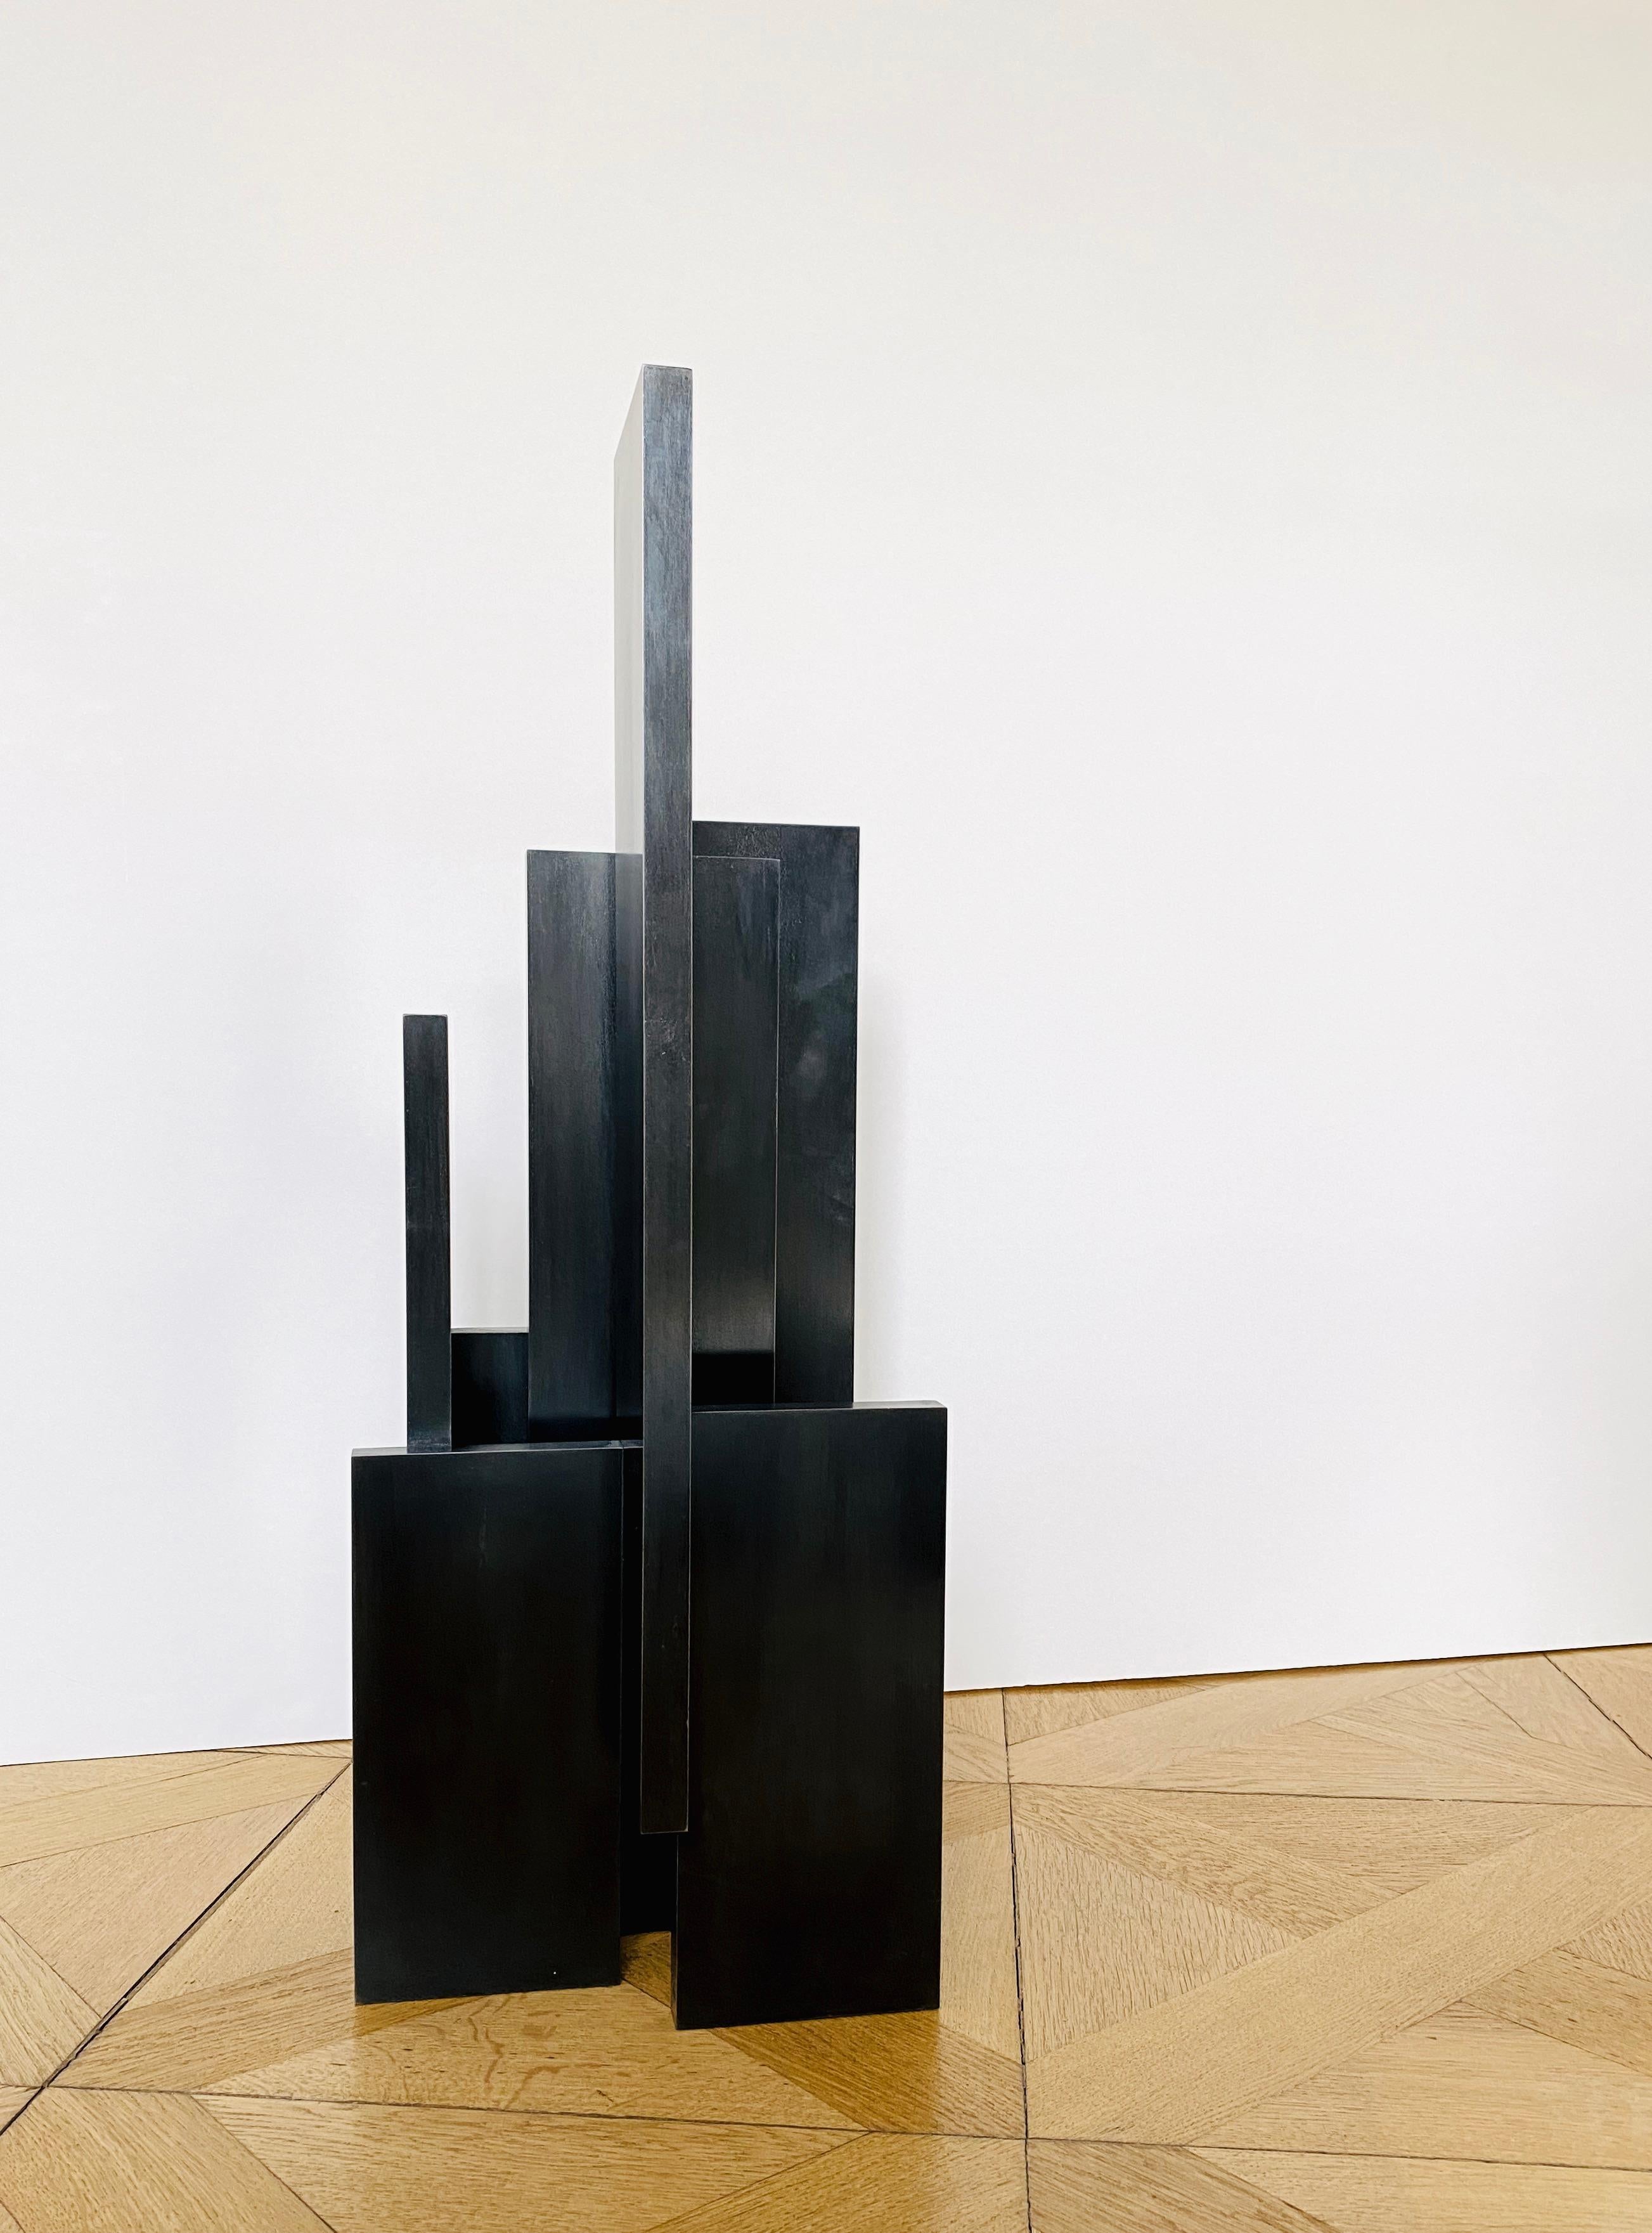 Architecture, 2018, steel sculpture, abstract, rust, minimalism,  - Sculpture by Etienne Viard